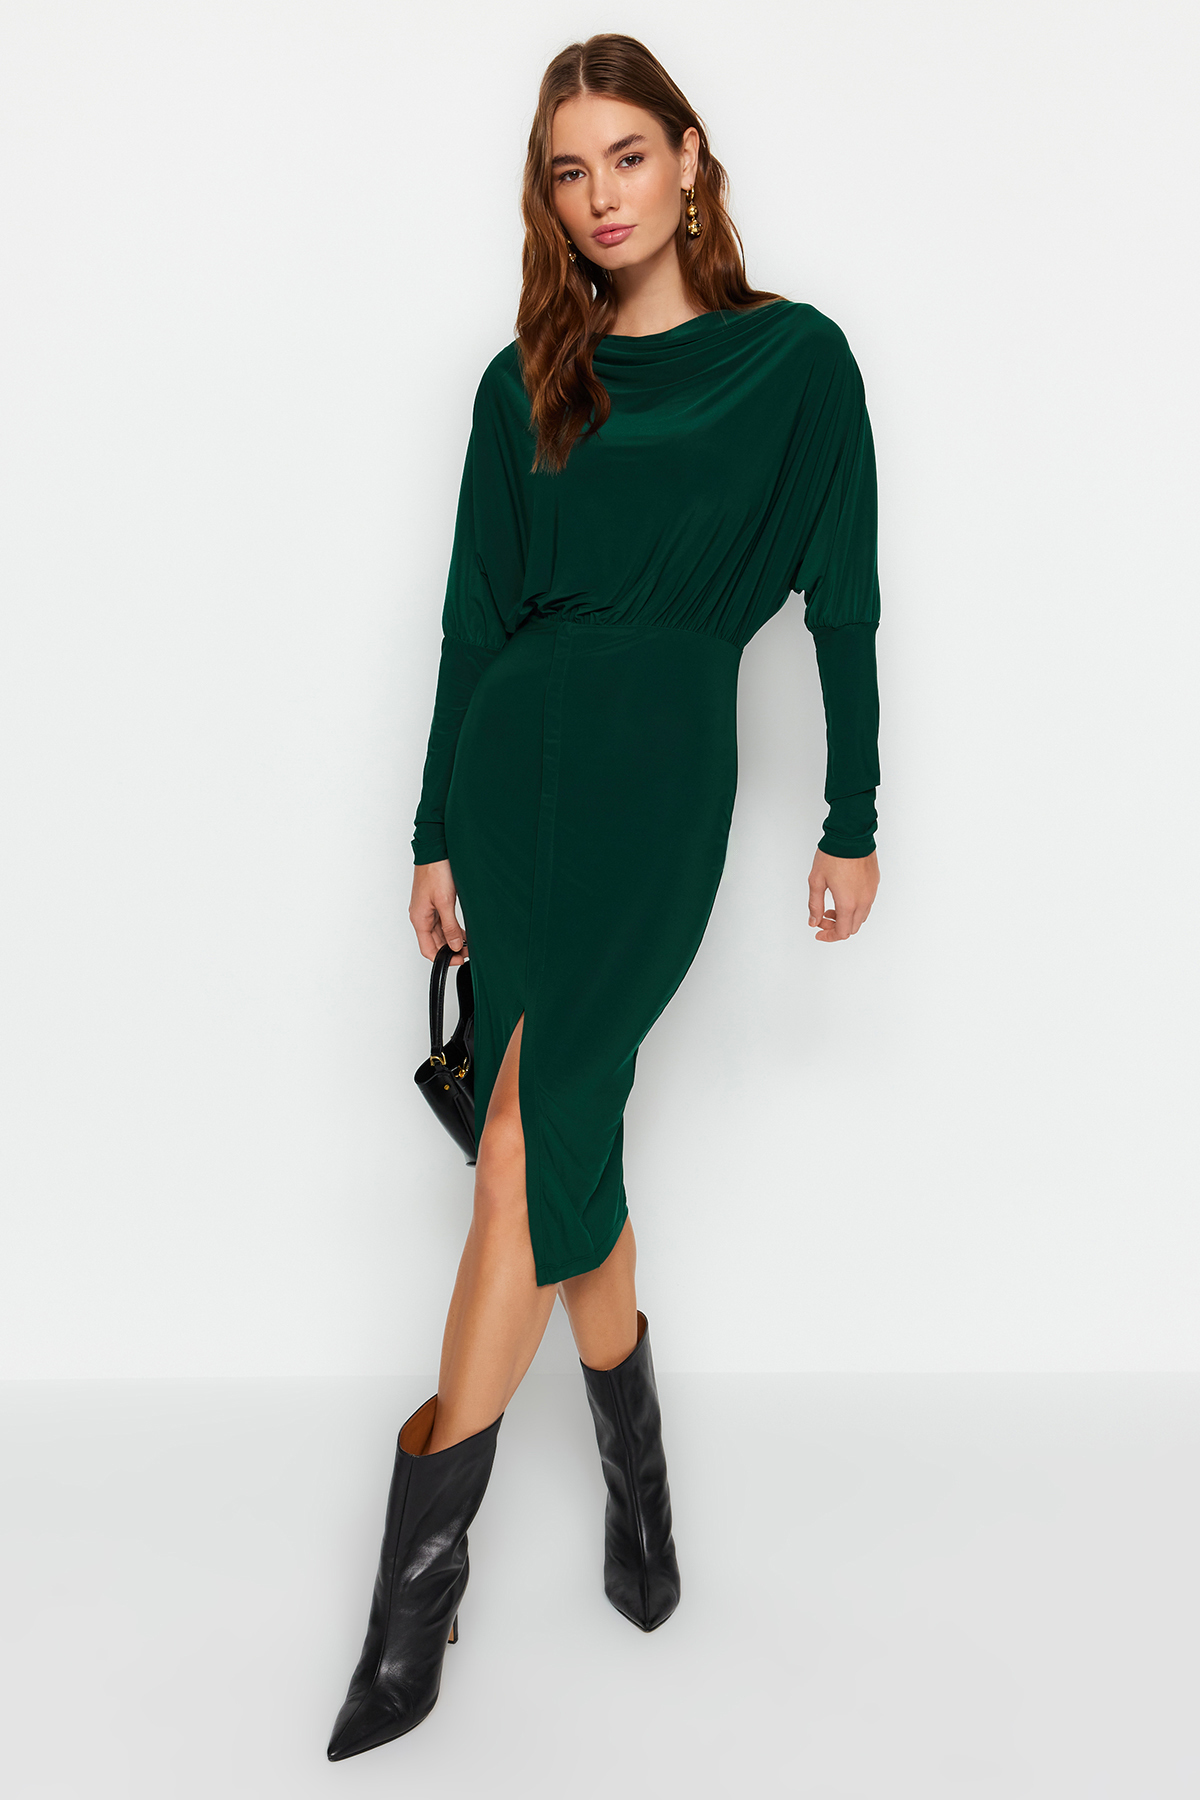 Trendyol Emerald Green Clad Collar A-Line / A-Line Formal Midi Stretch Knit Dress with a Slit